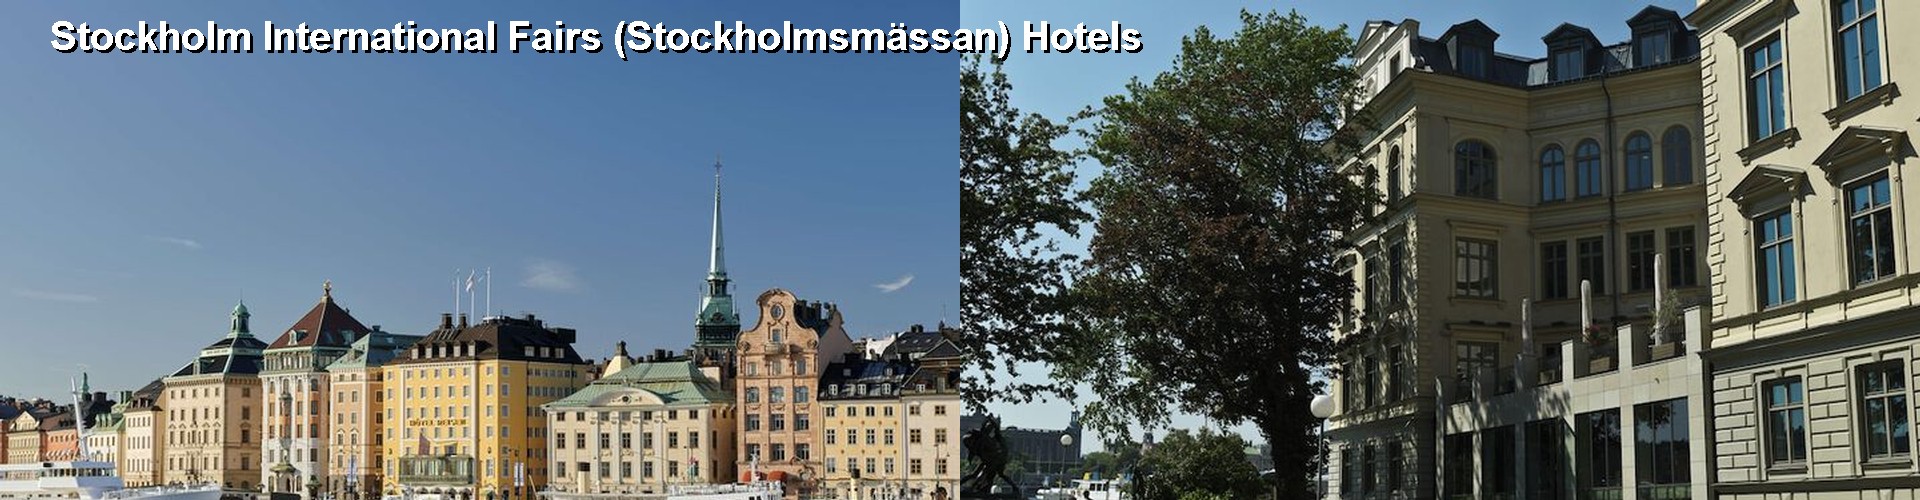 5 Best Hotels near Stockholm International Fairs (Stockholmsmässan)